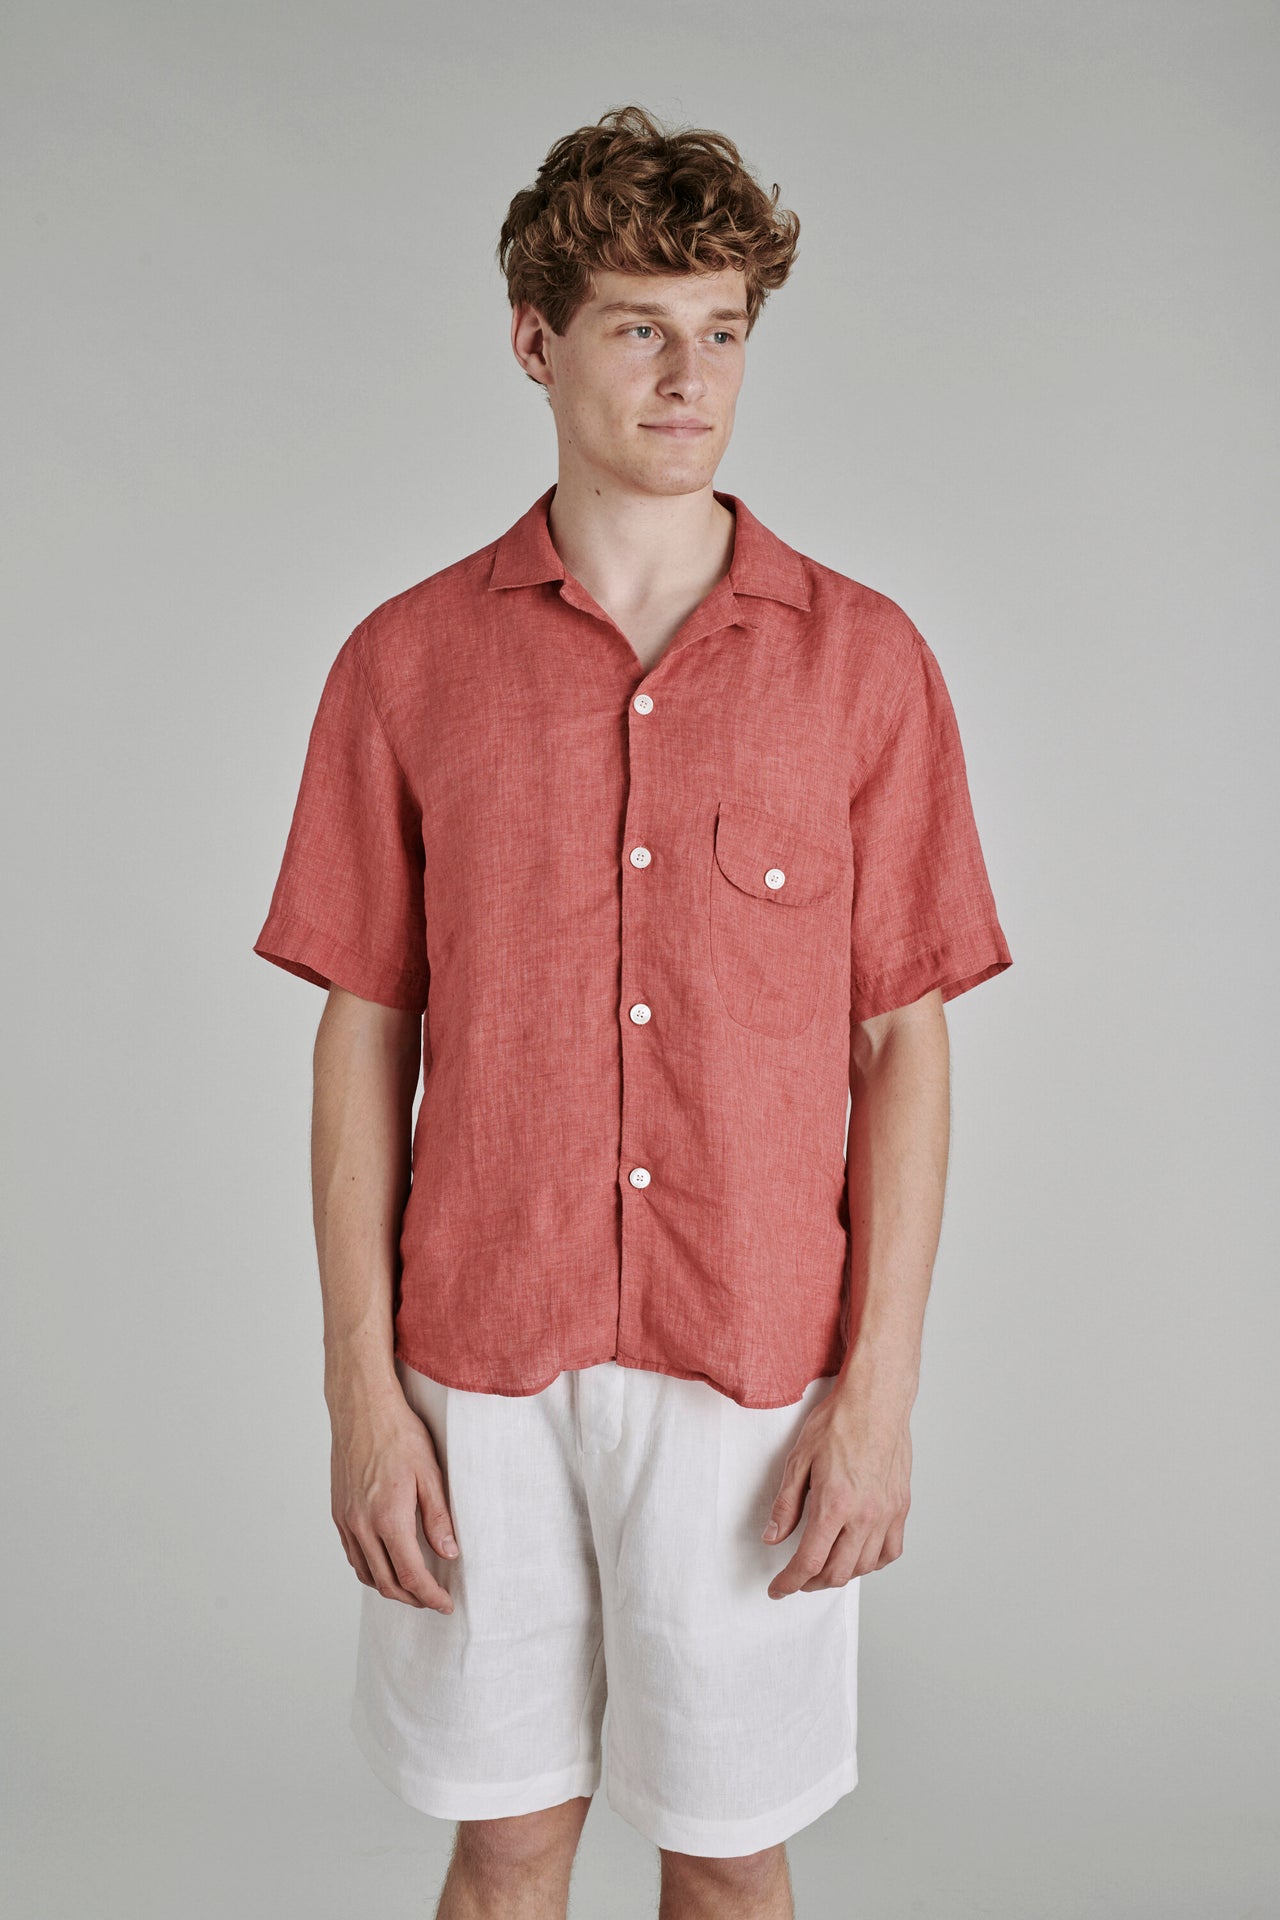 Camp Collar Shirt in a Strawberry Delavé Italian Traceable Italian Linen by Albini